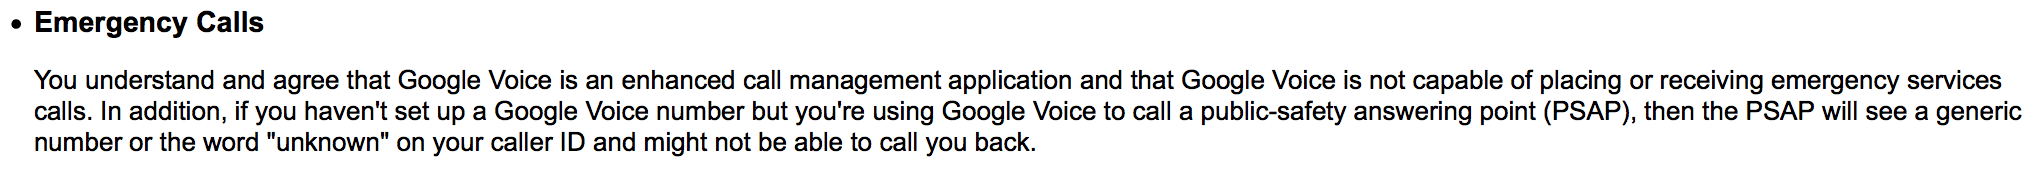 Google Voice ToS